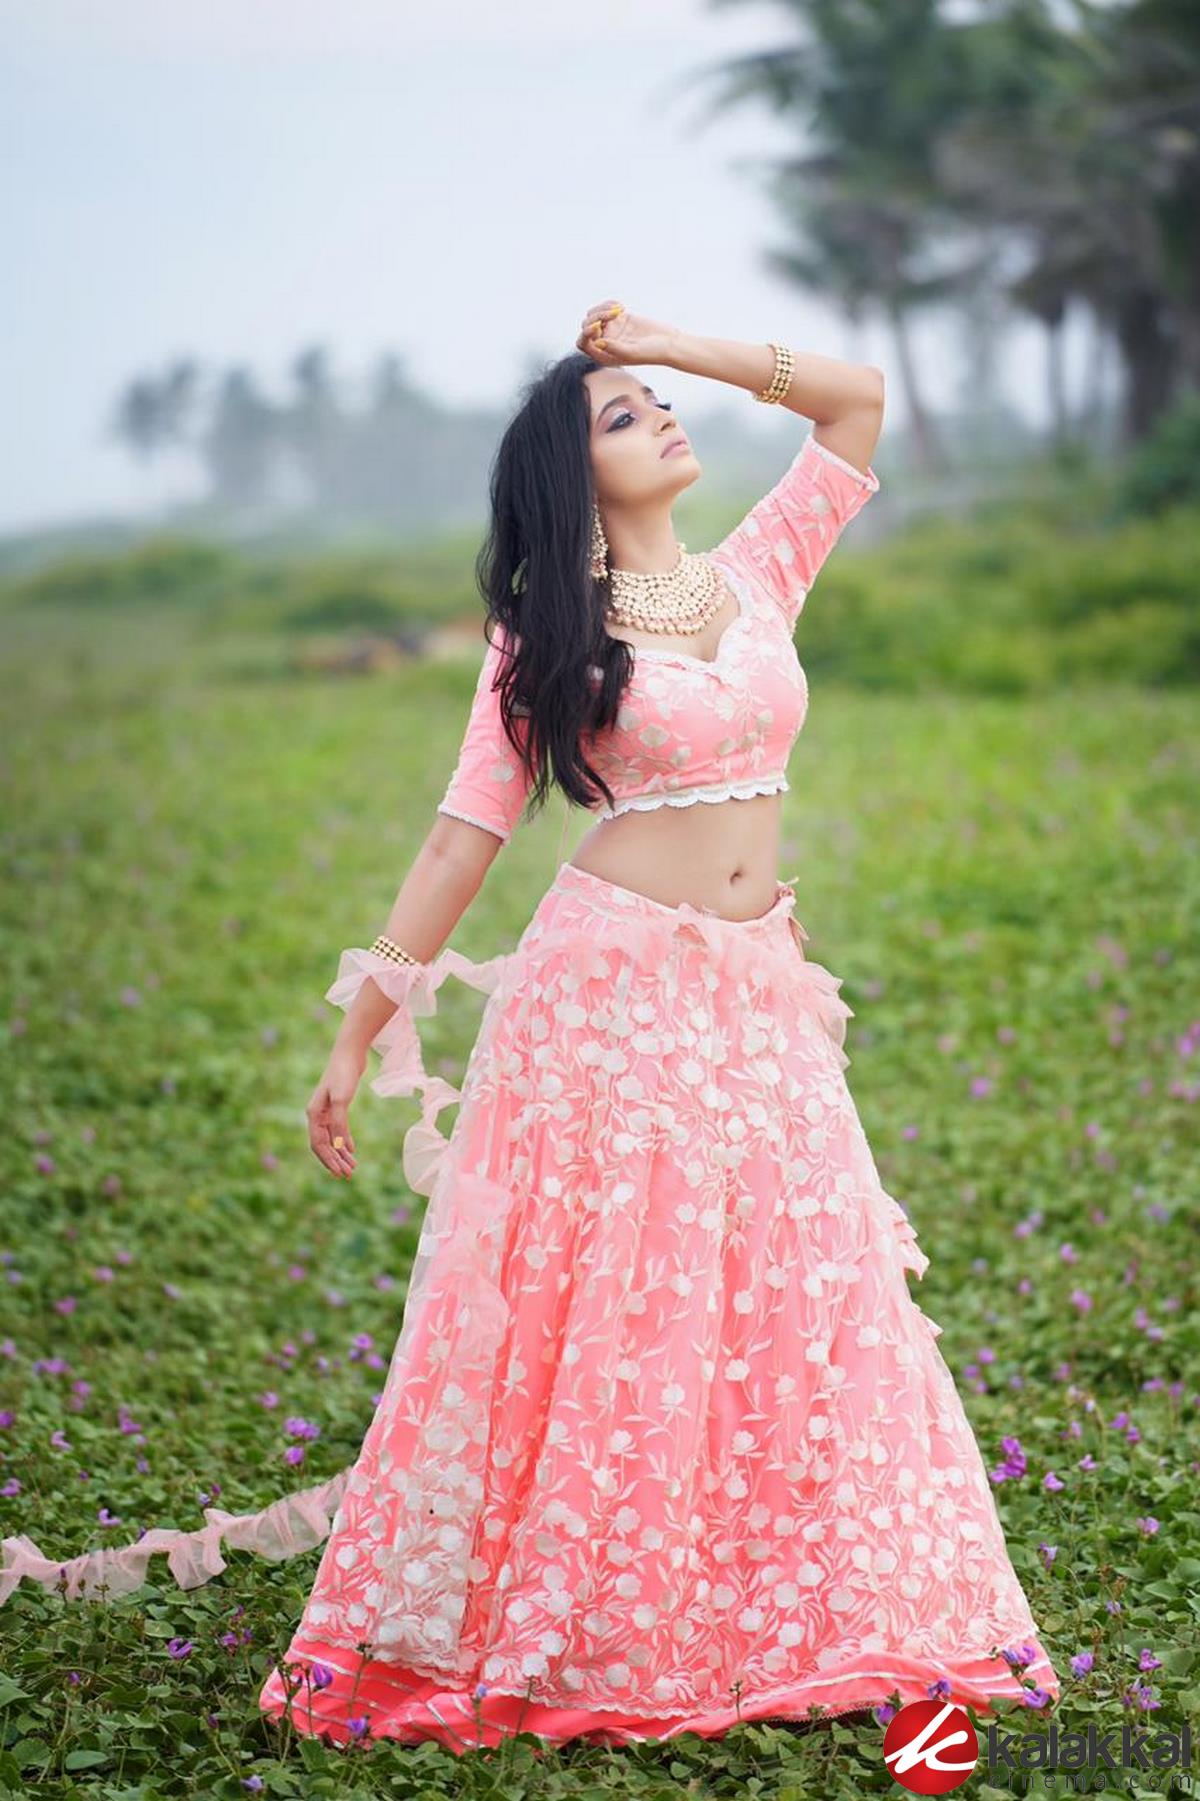 Actress Abarnathi Latest Photoshoot Stills